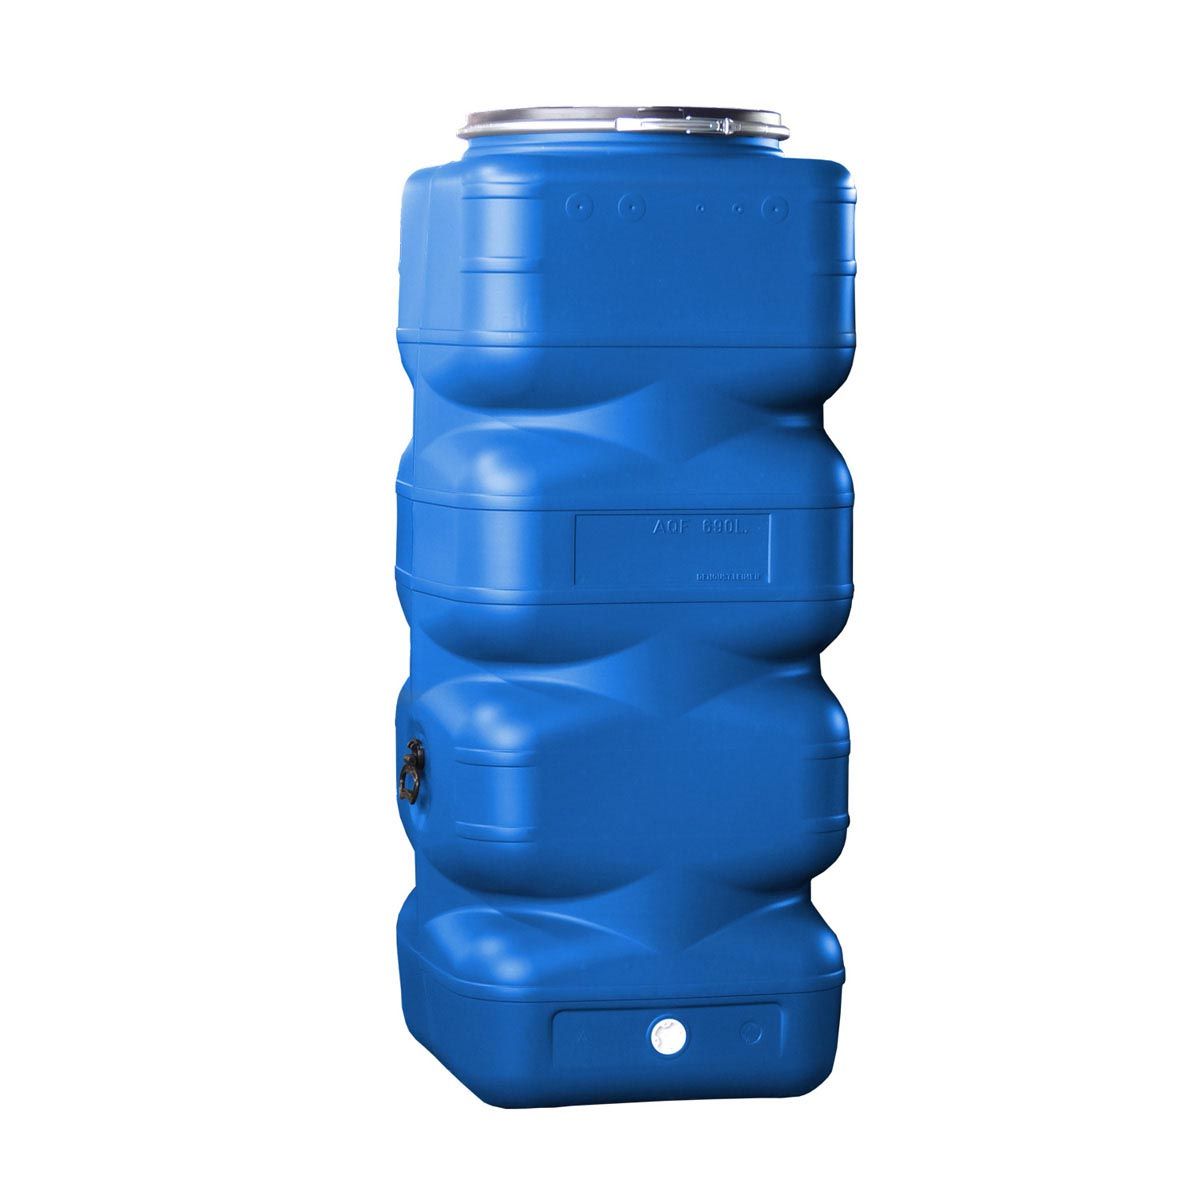 Lagertank AQF, aus PE-HD, blau